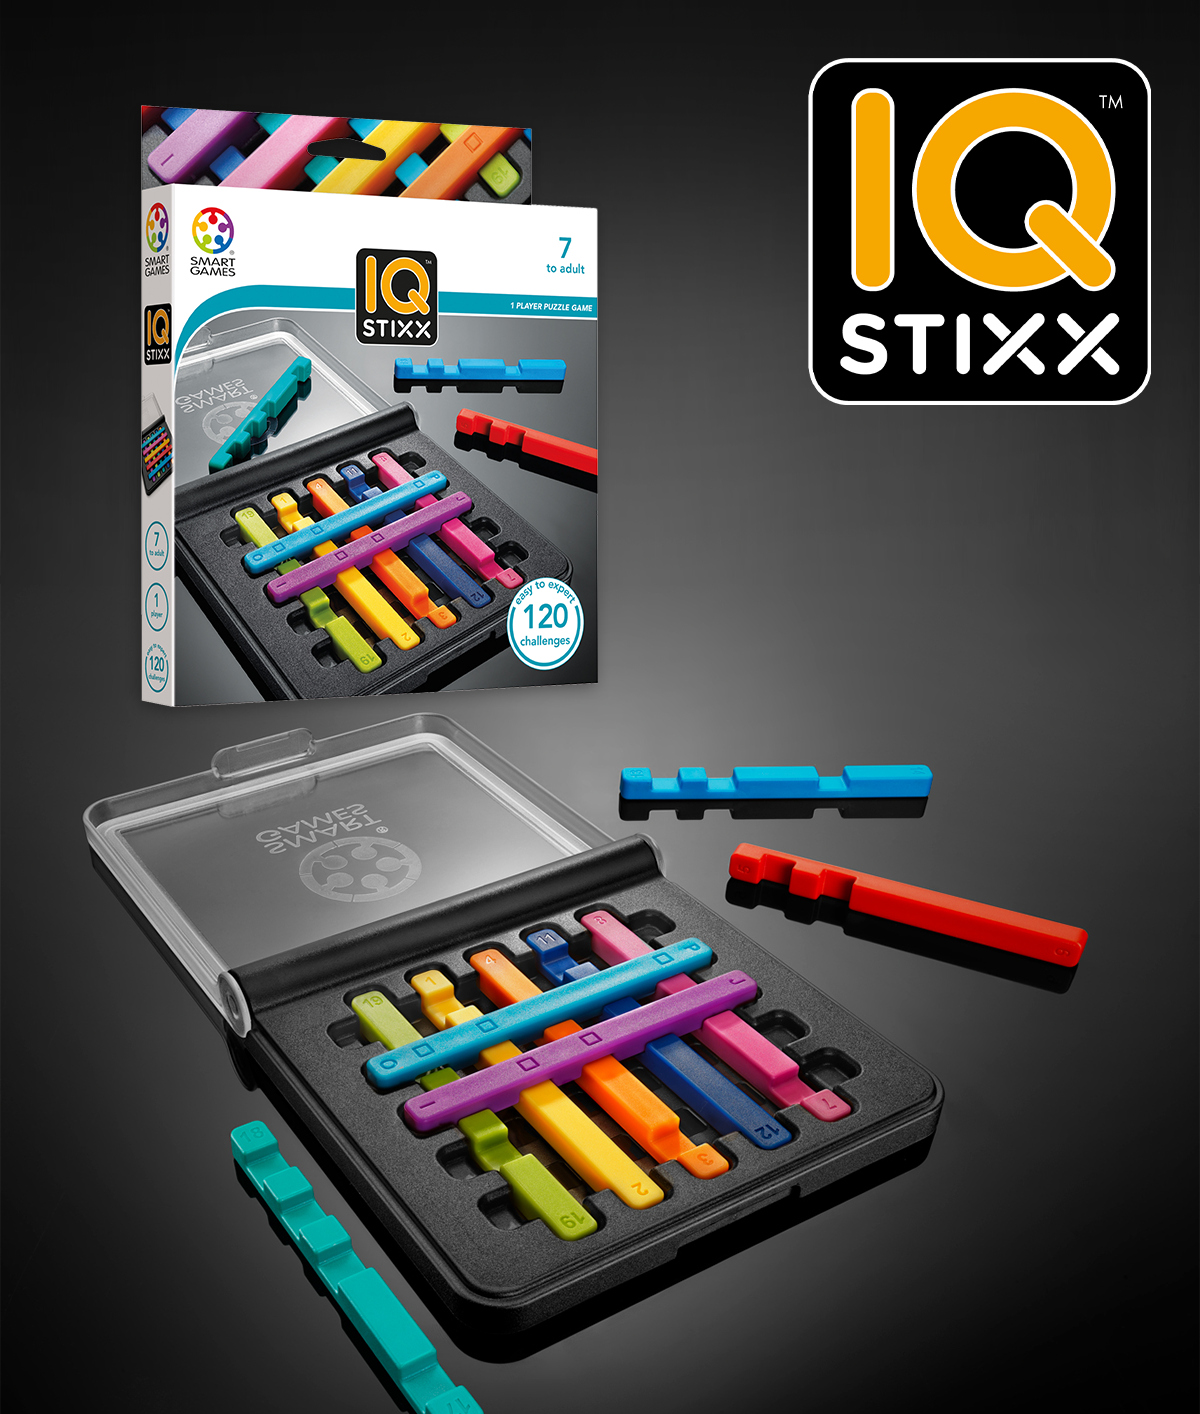 IQ Stixx Puzzle Game